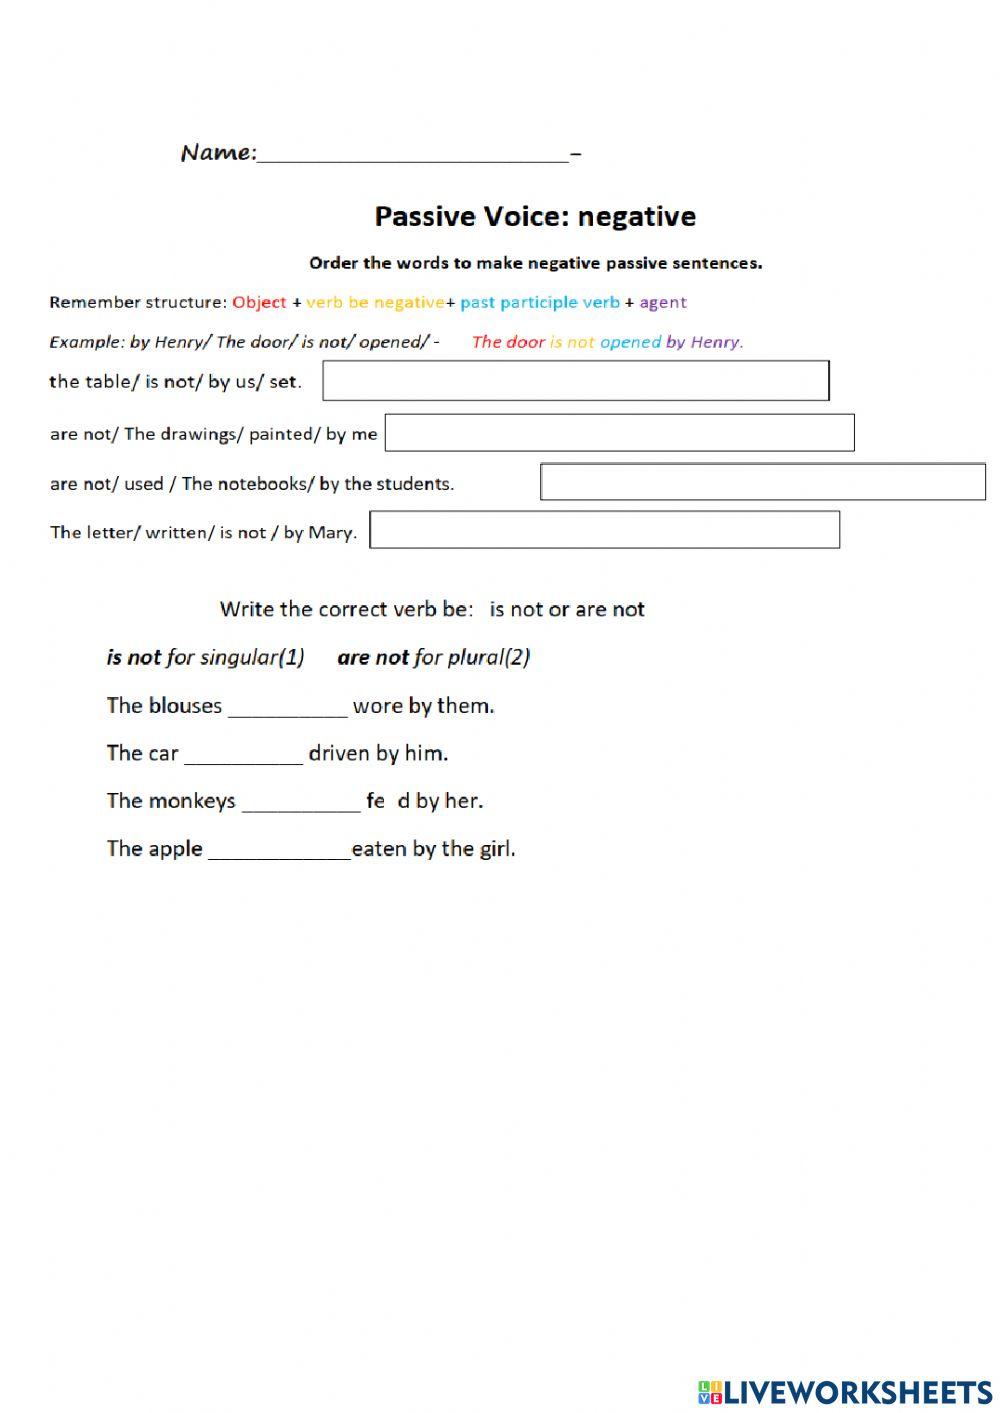 Passive voice negative